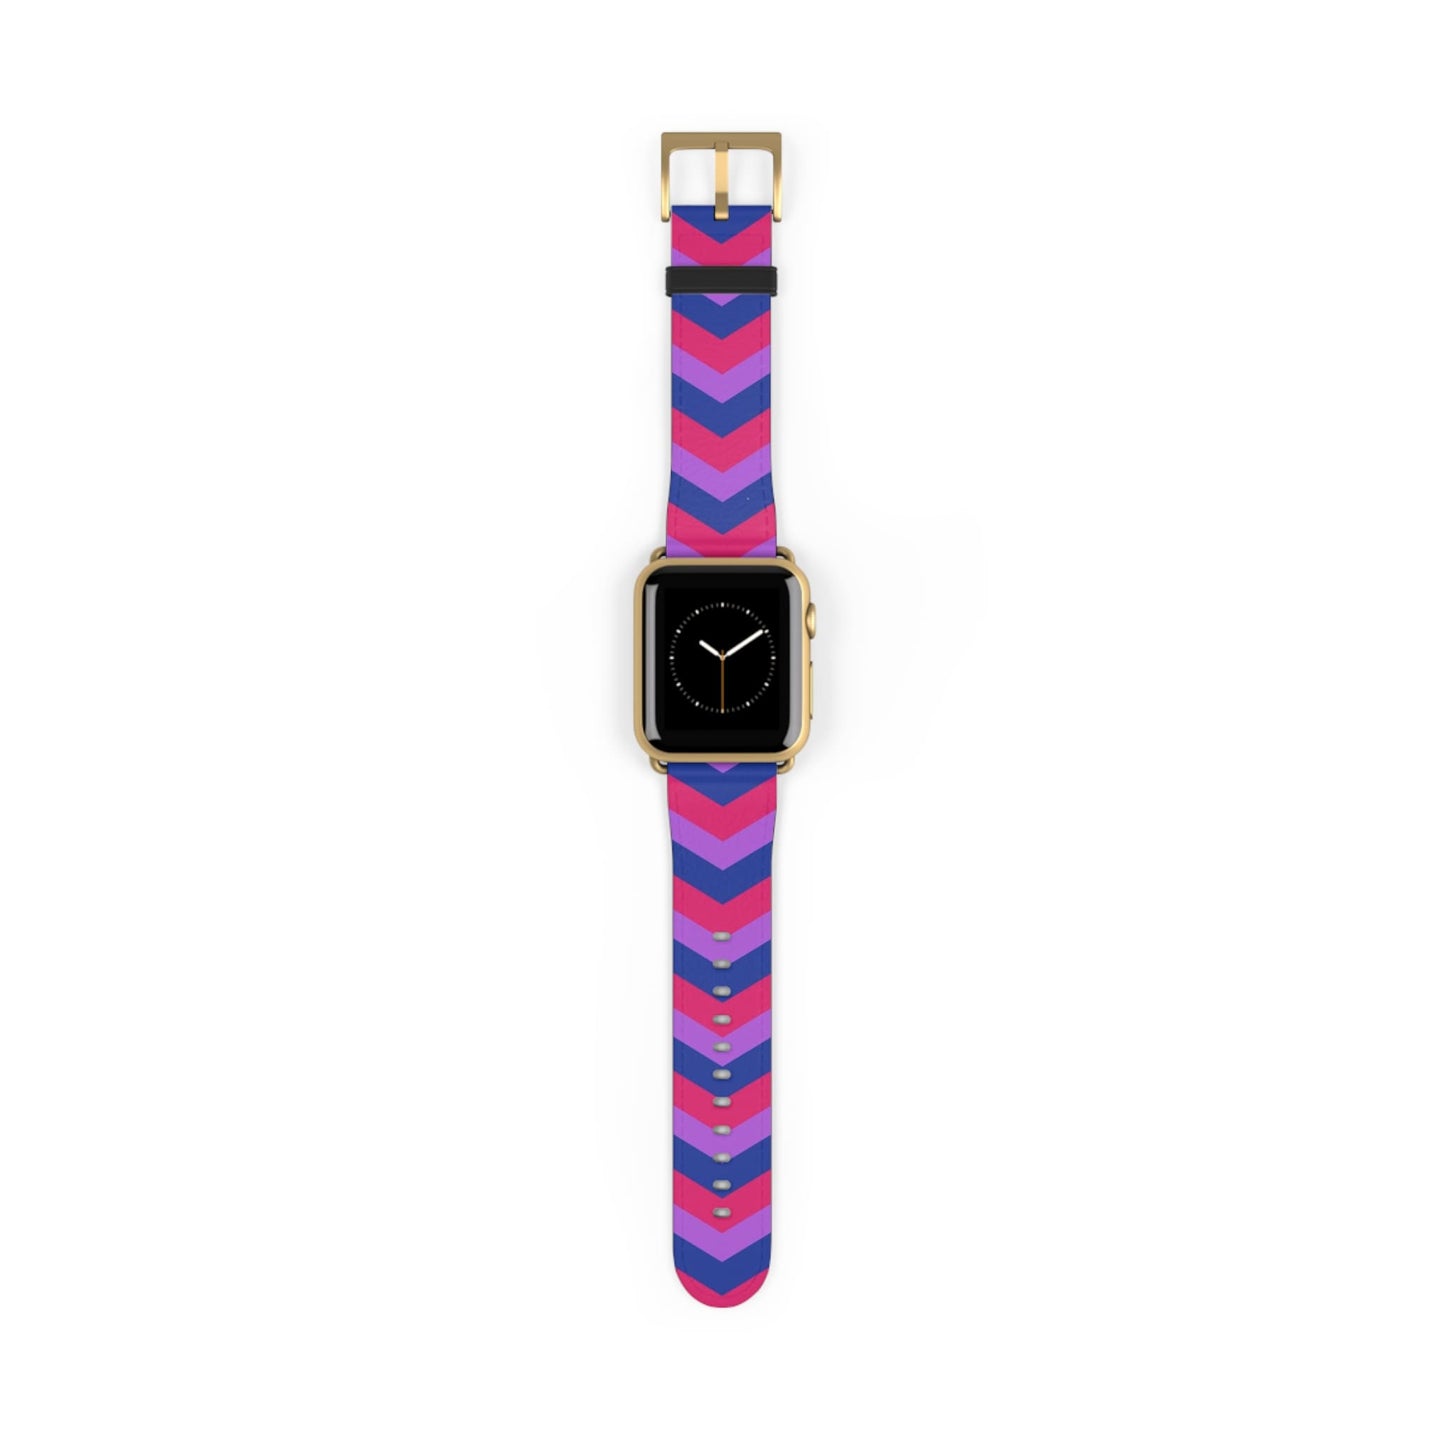 bisexual apple watch band, discreet chevron pattern, gold